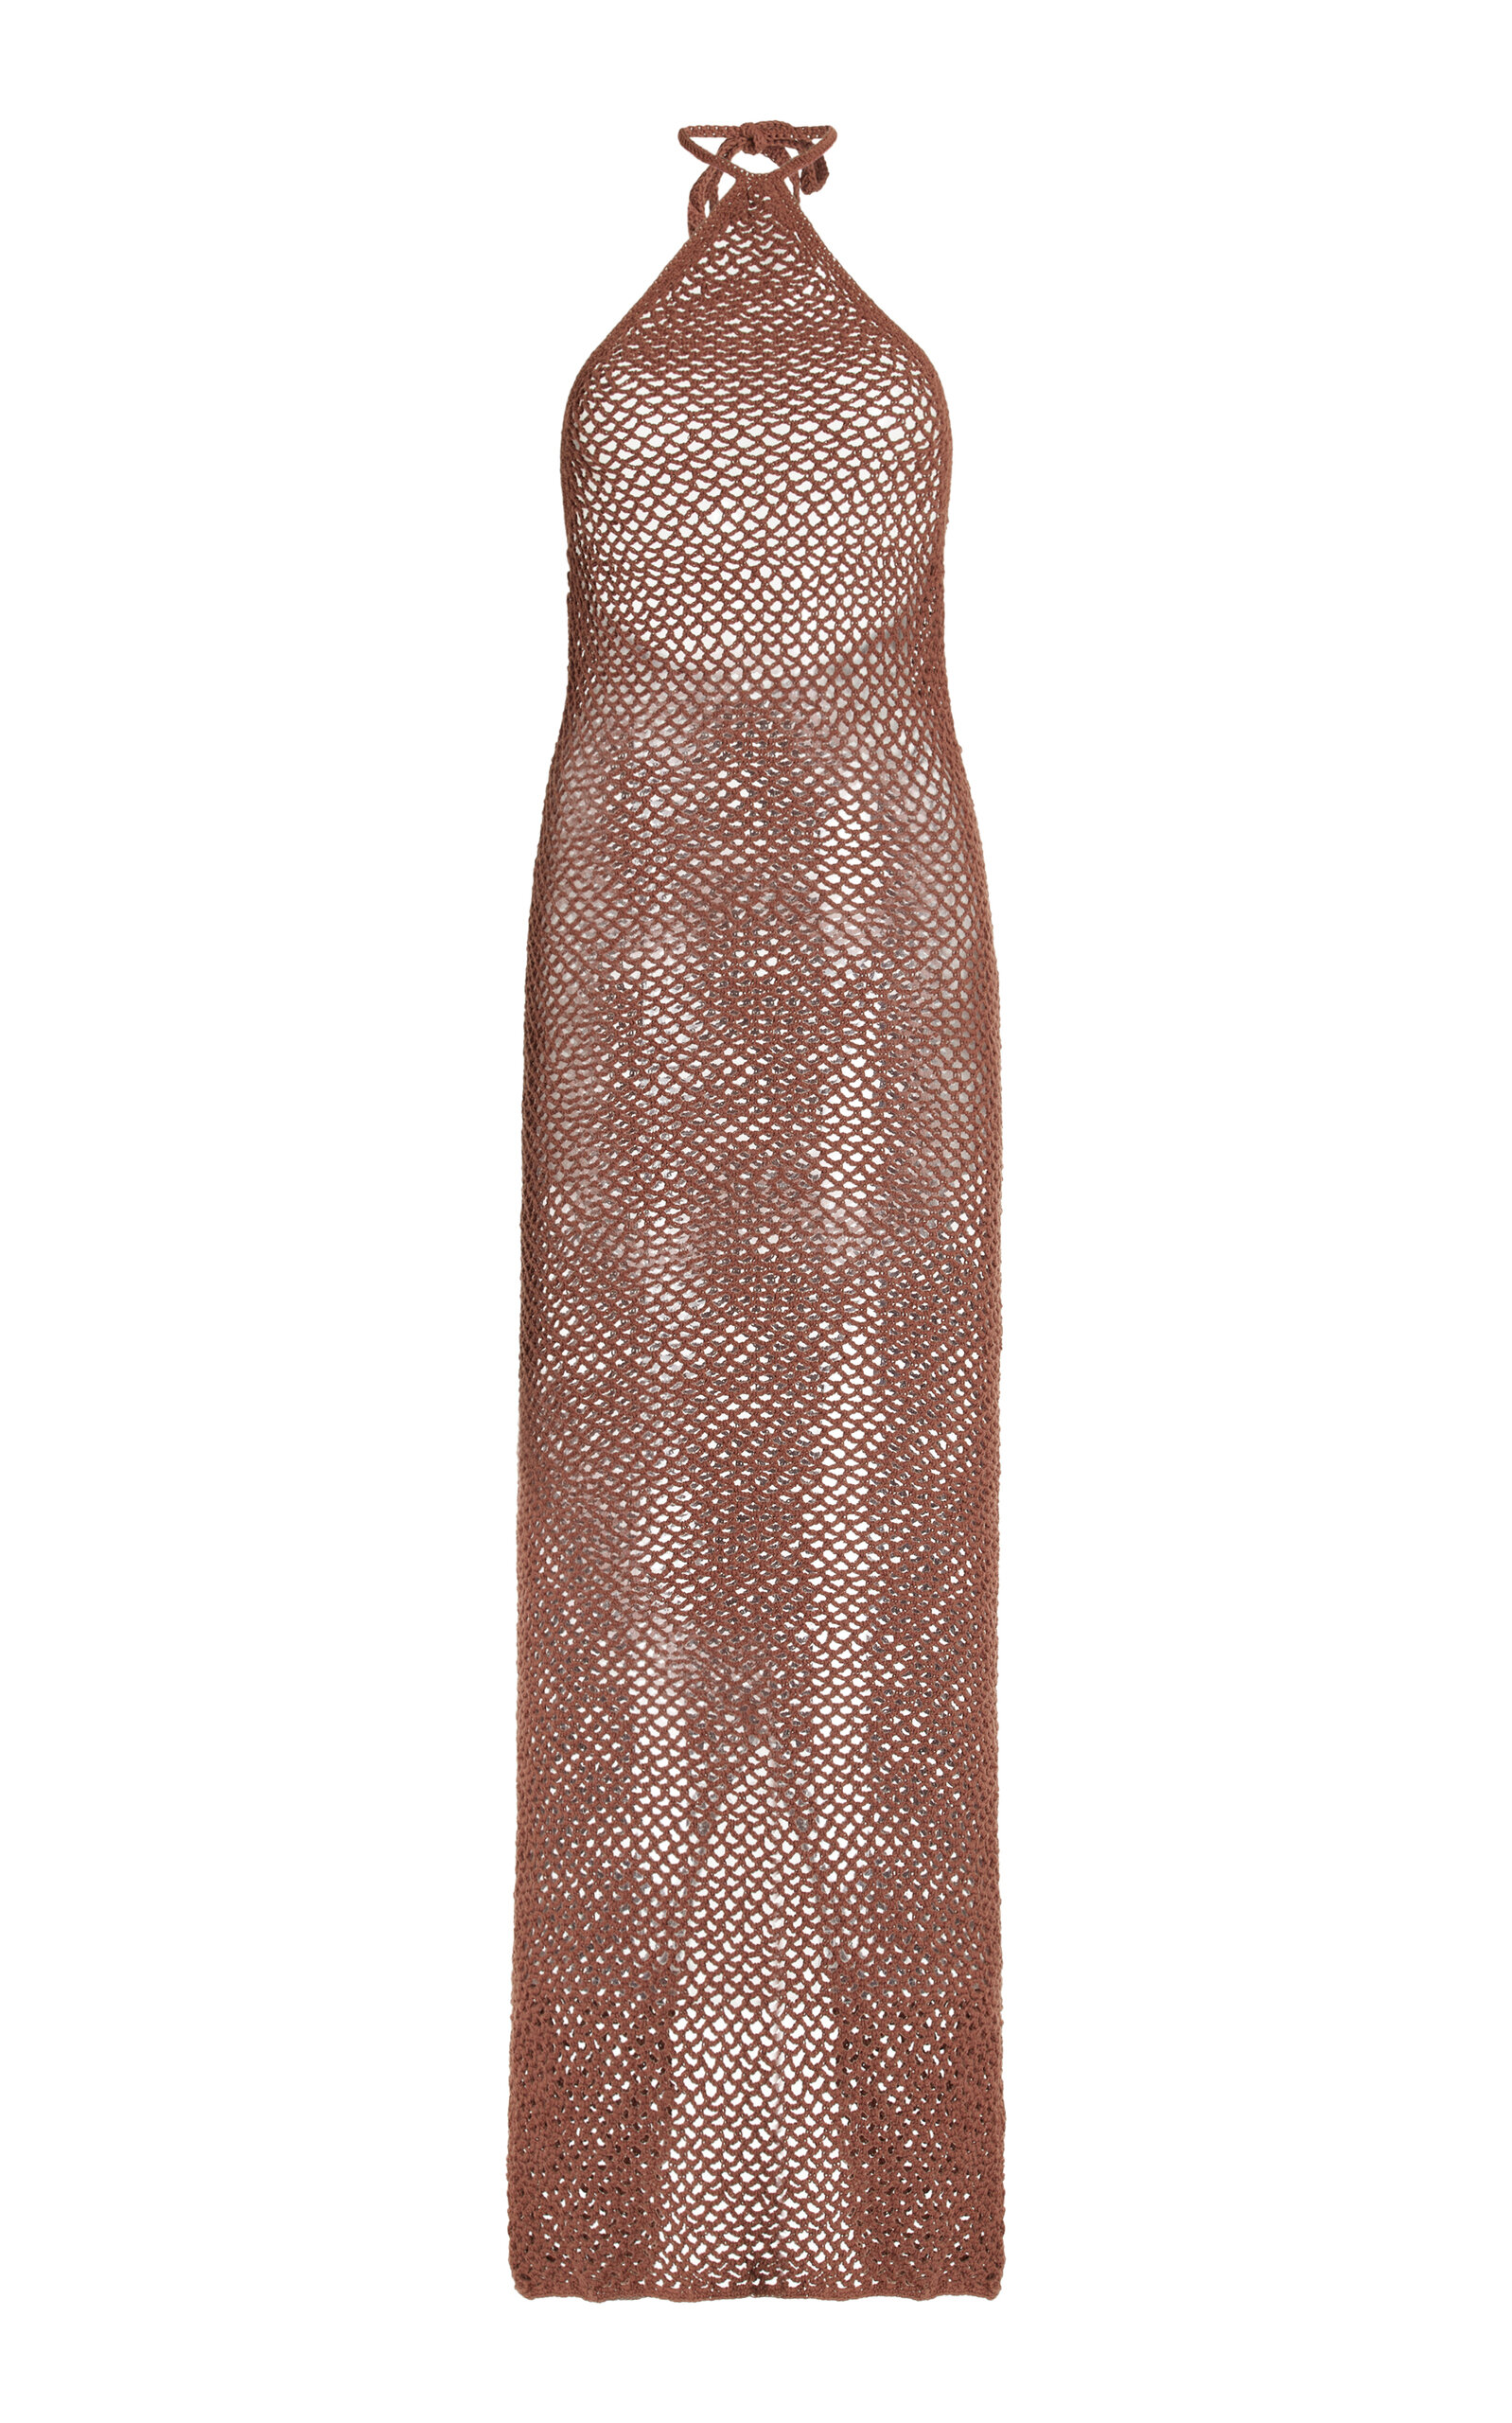 Nefali Crocheted Cotton Maxi Dress